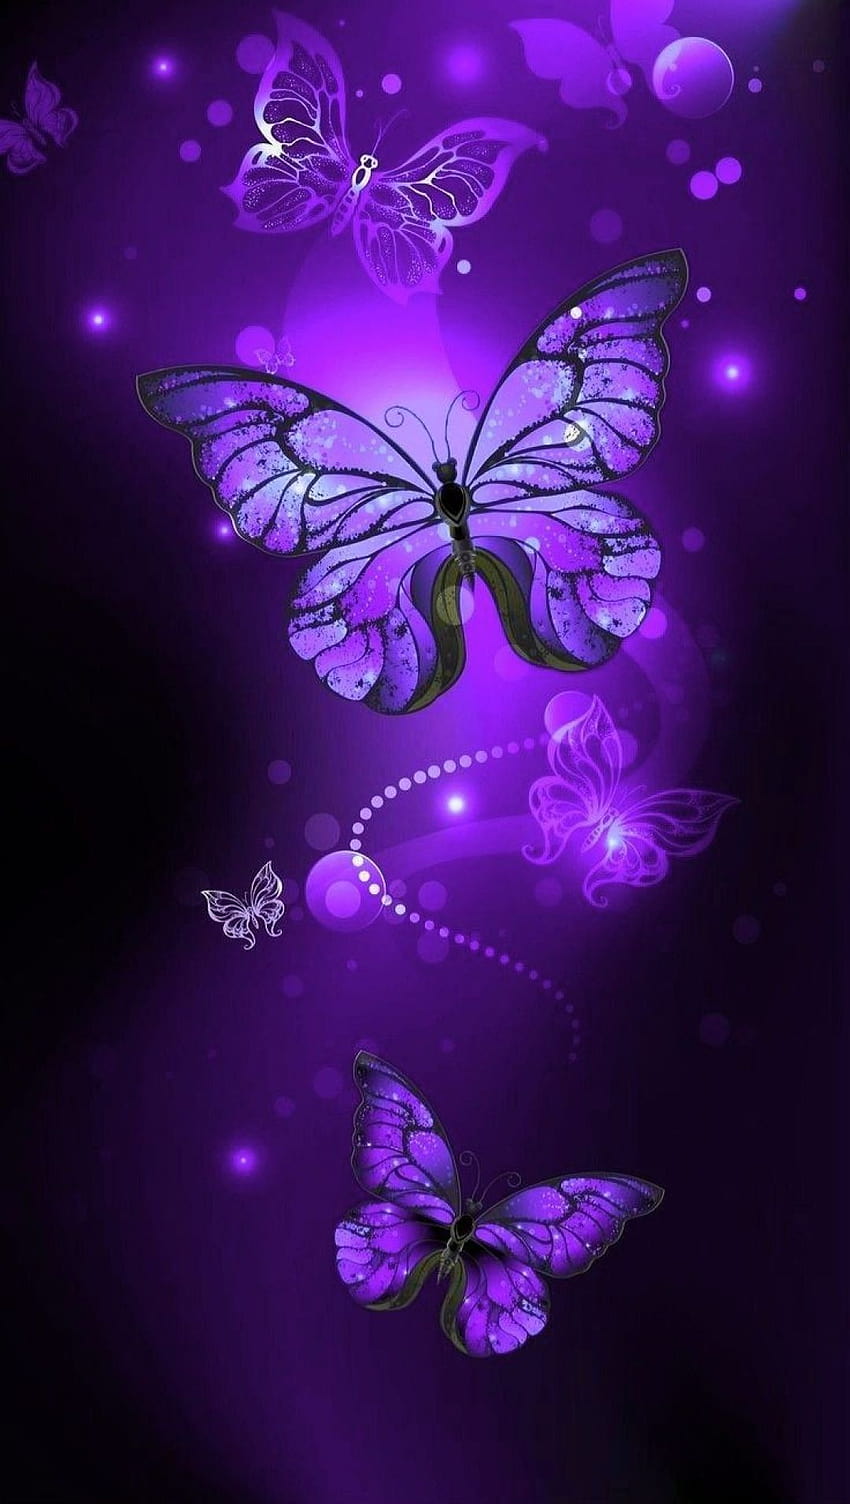 Iphone Butterfly, aesthetic purple butterfly HD phone wallpaper